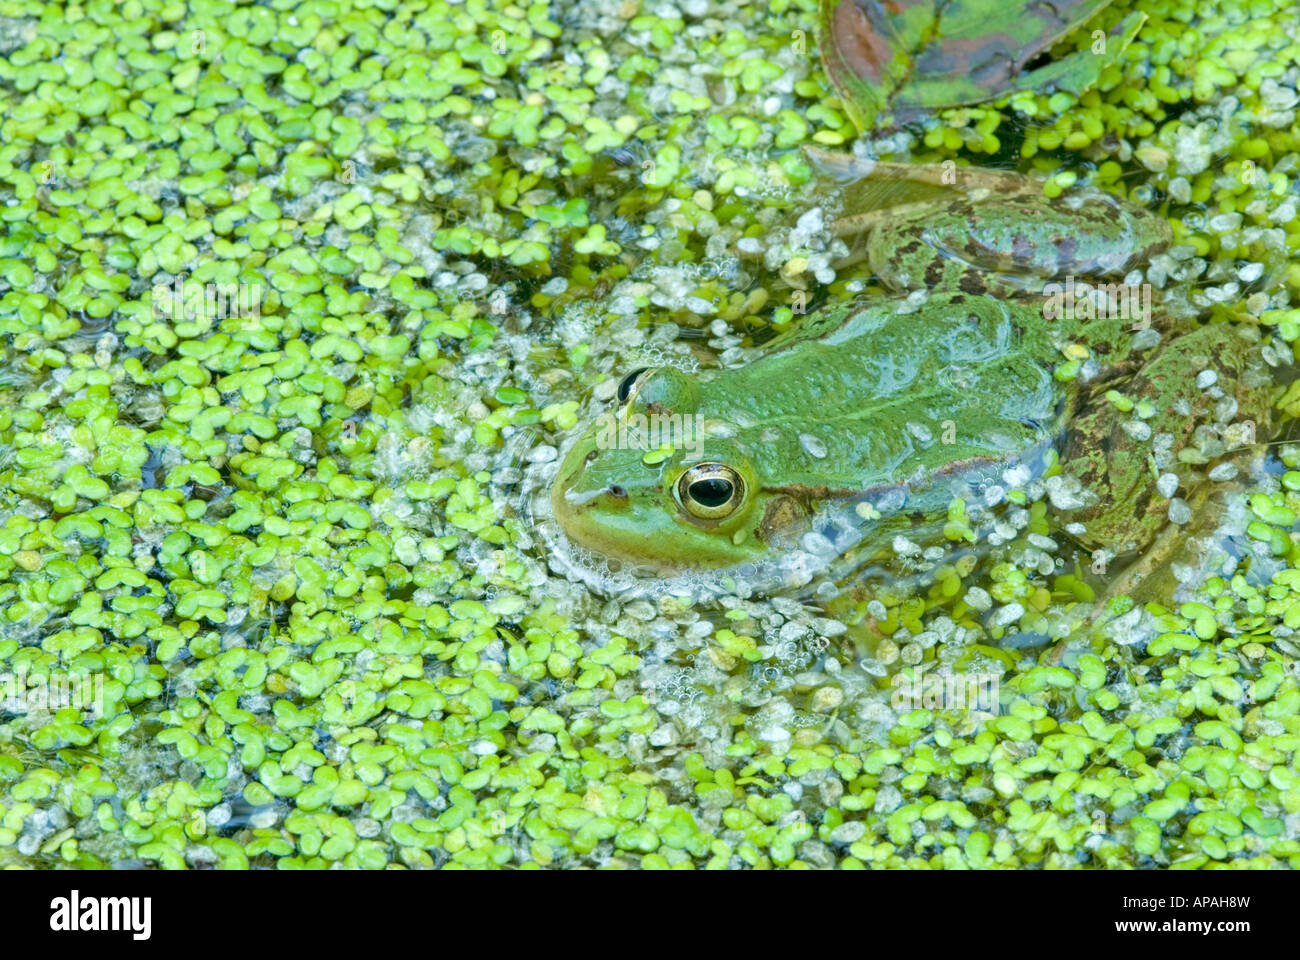 European Edible Frog (Rana esculenta) in pond among Duckweed Stock Photo